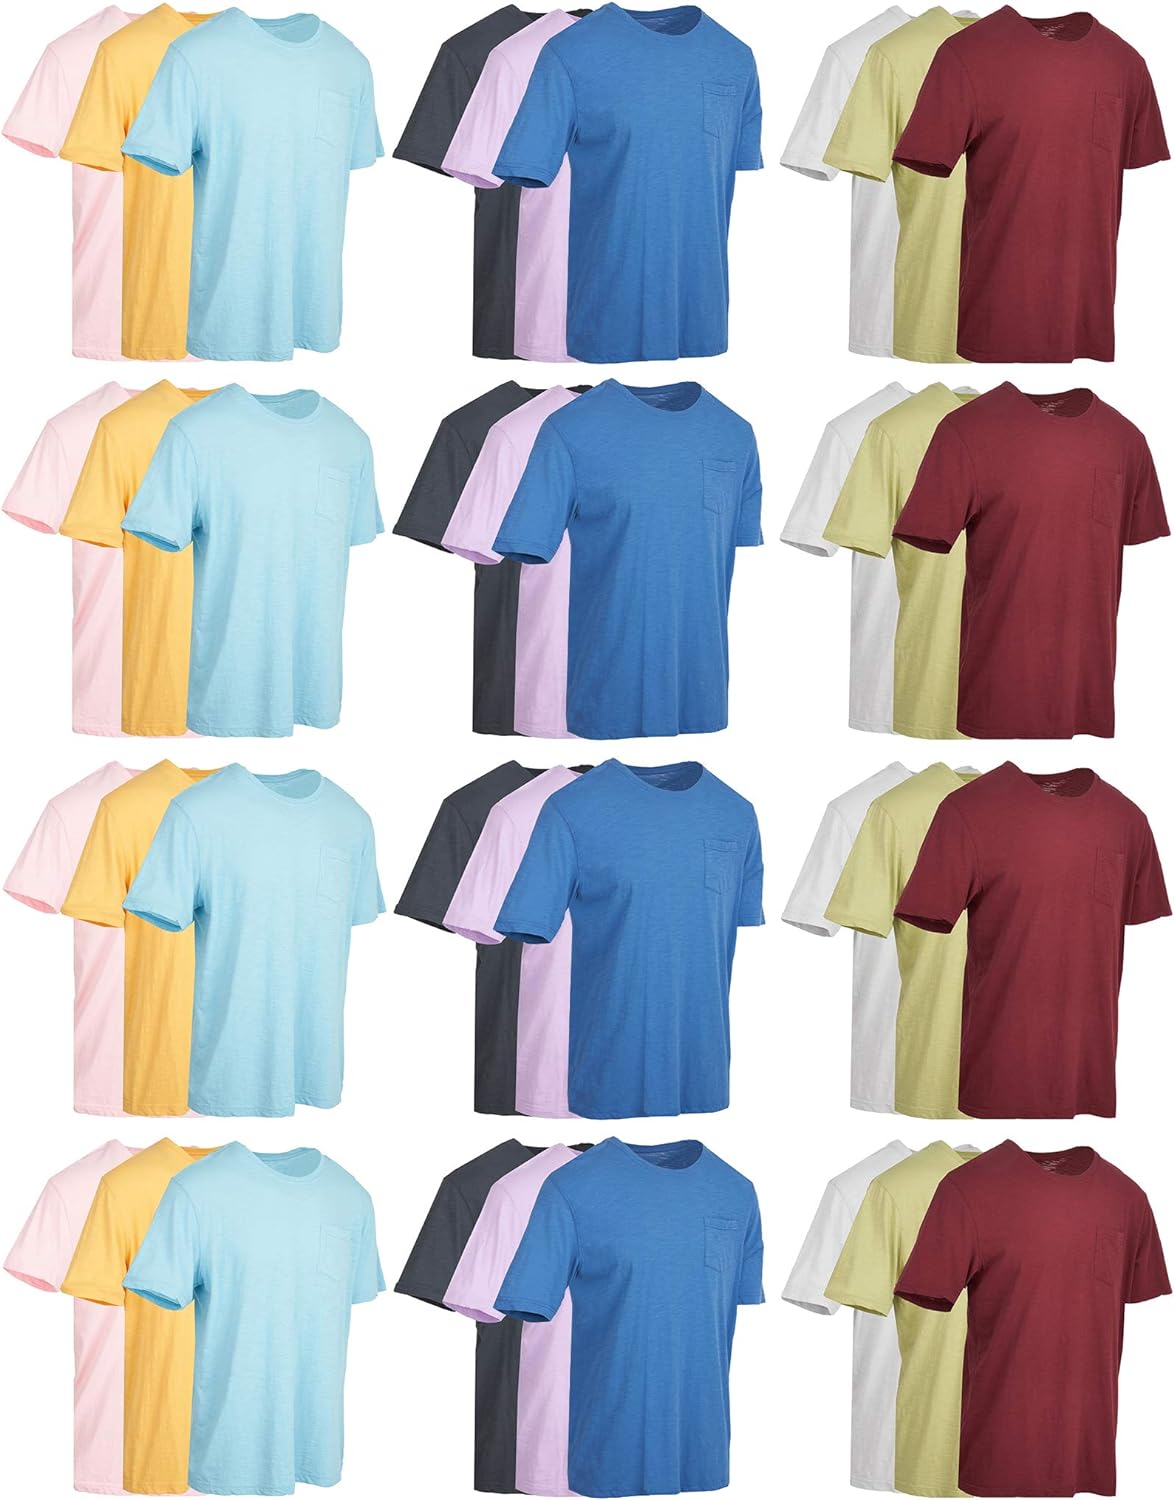 Yacht & Smith 36 Pack of Mens Cotton Slub Pocket Tees Tshirt, T-Shirts in Bulk Wholesale, Colorful Packs (2XL)